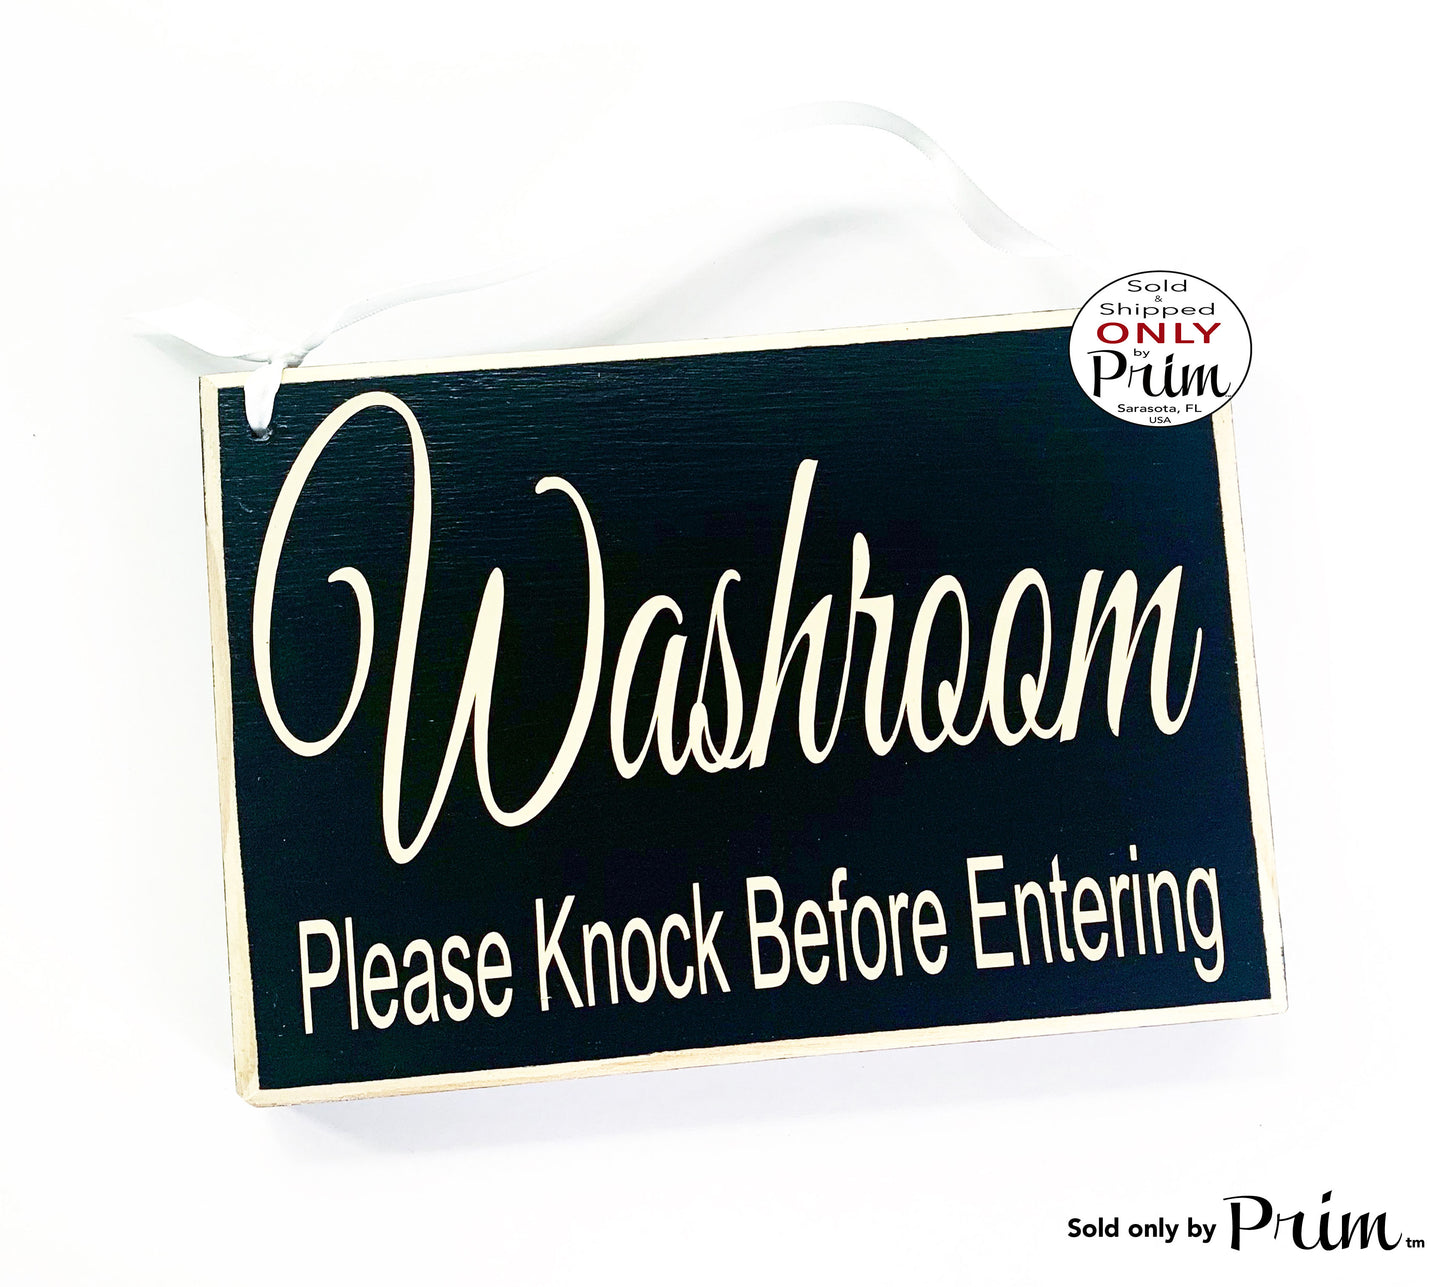 8x6 Washroom Please Knock Before Entering Custom Wood Sign | Restroom WC Loo Business Store Shop Women Men Wall Door Plaque | Private Hanger Designs by Prim